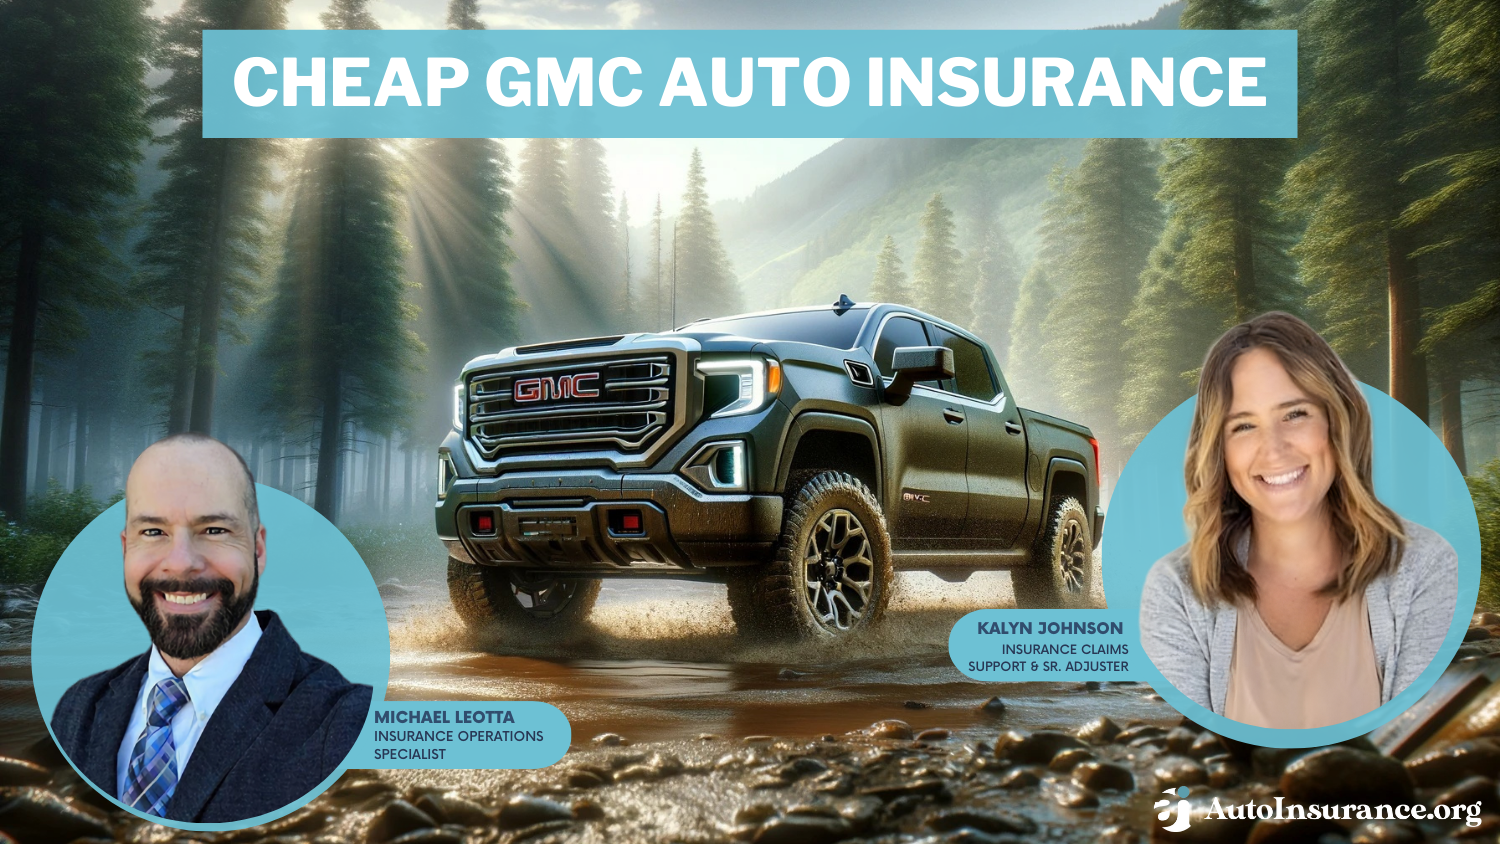 Cheap GMC Auto Insurance: Safeco, AAA, State Farm